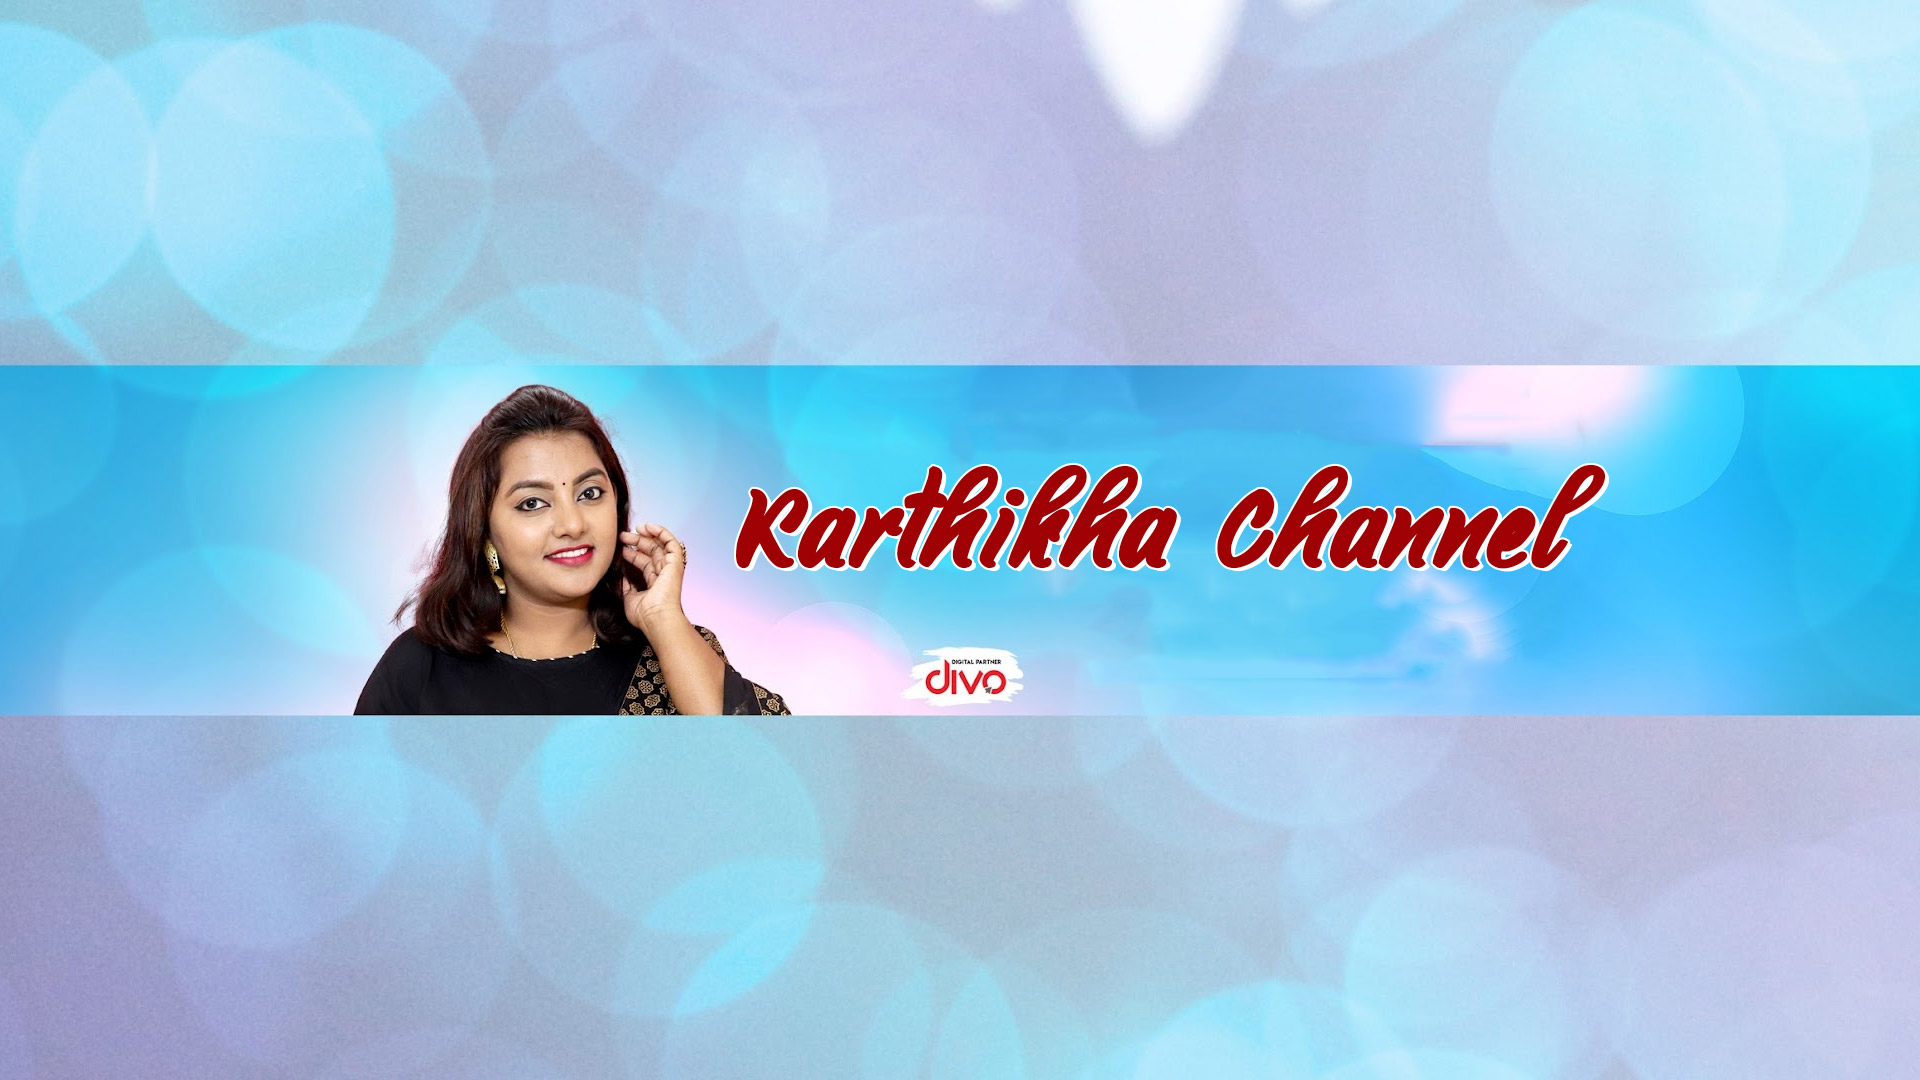 Karthikha Channel